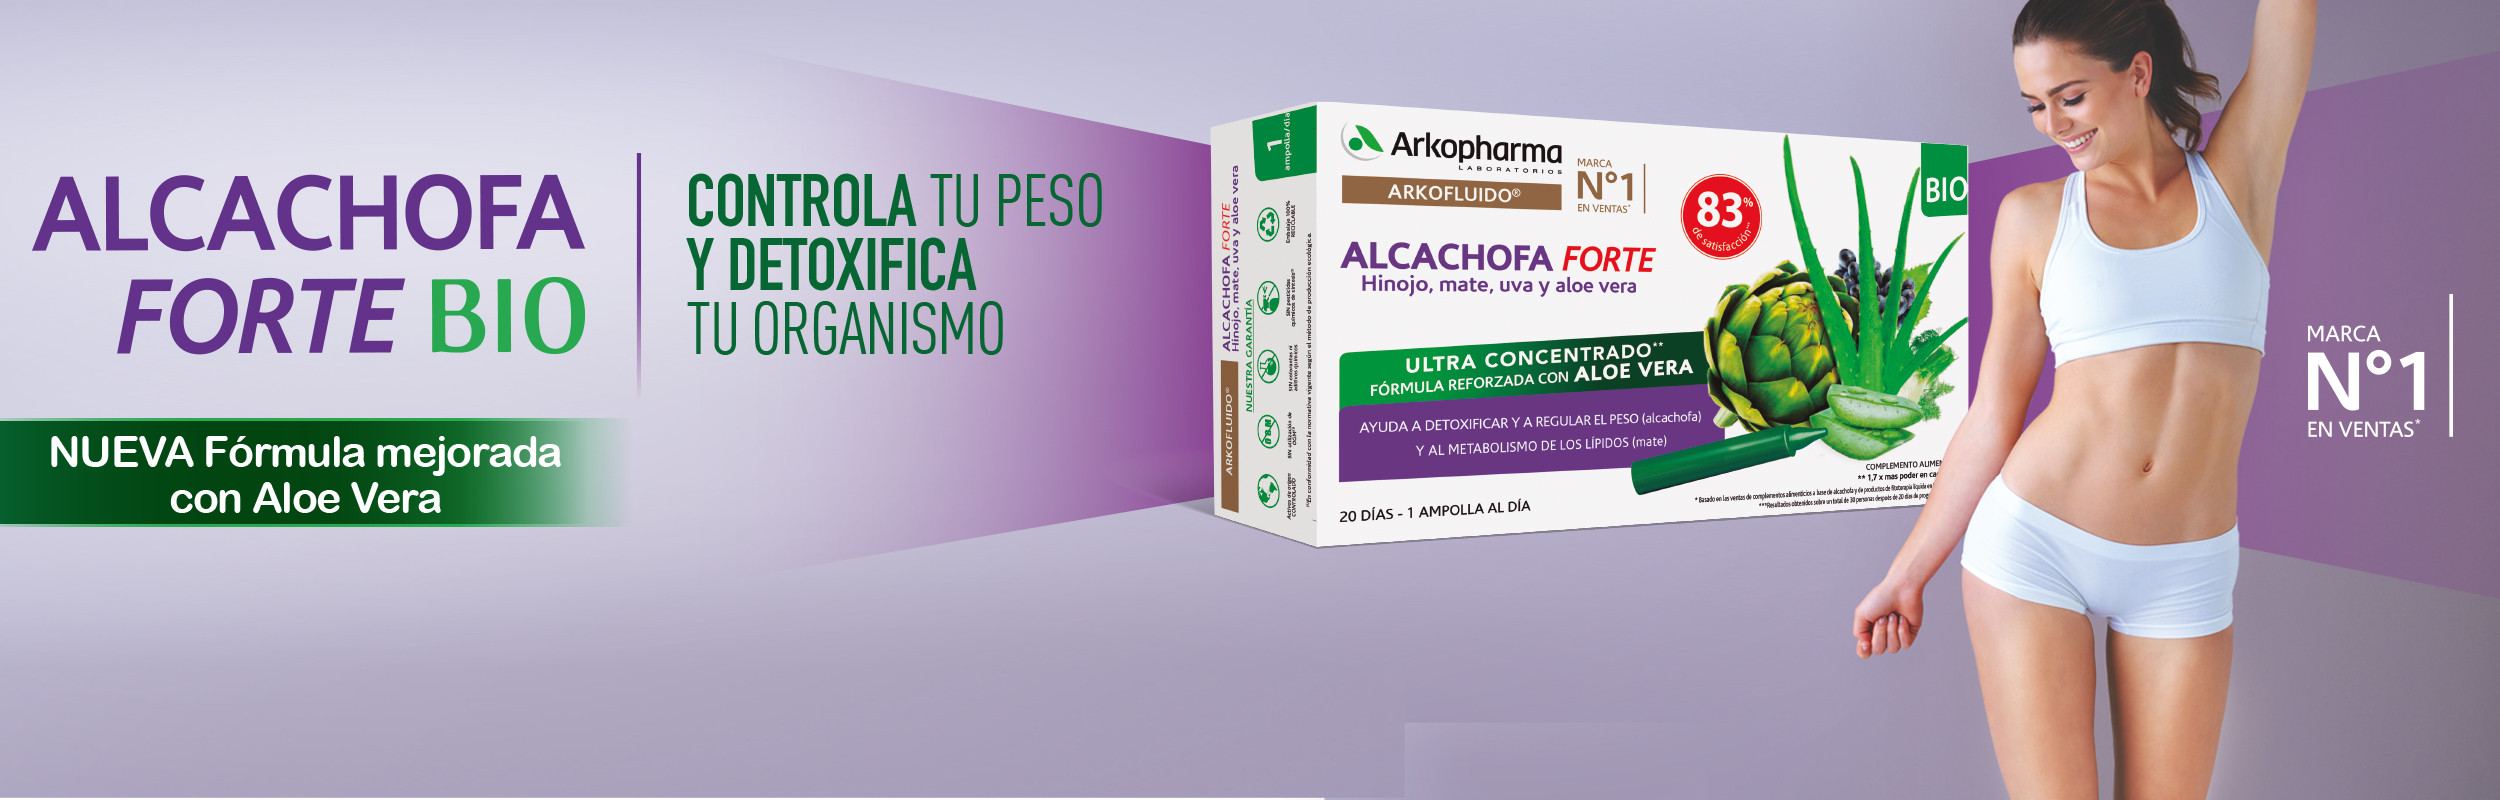 Arkofluido® Alcachofa forte